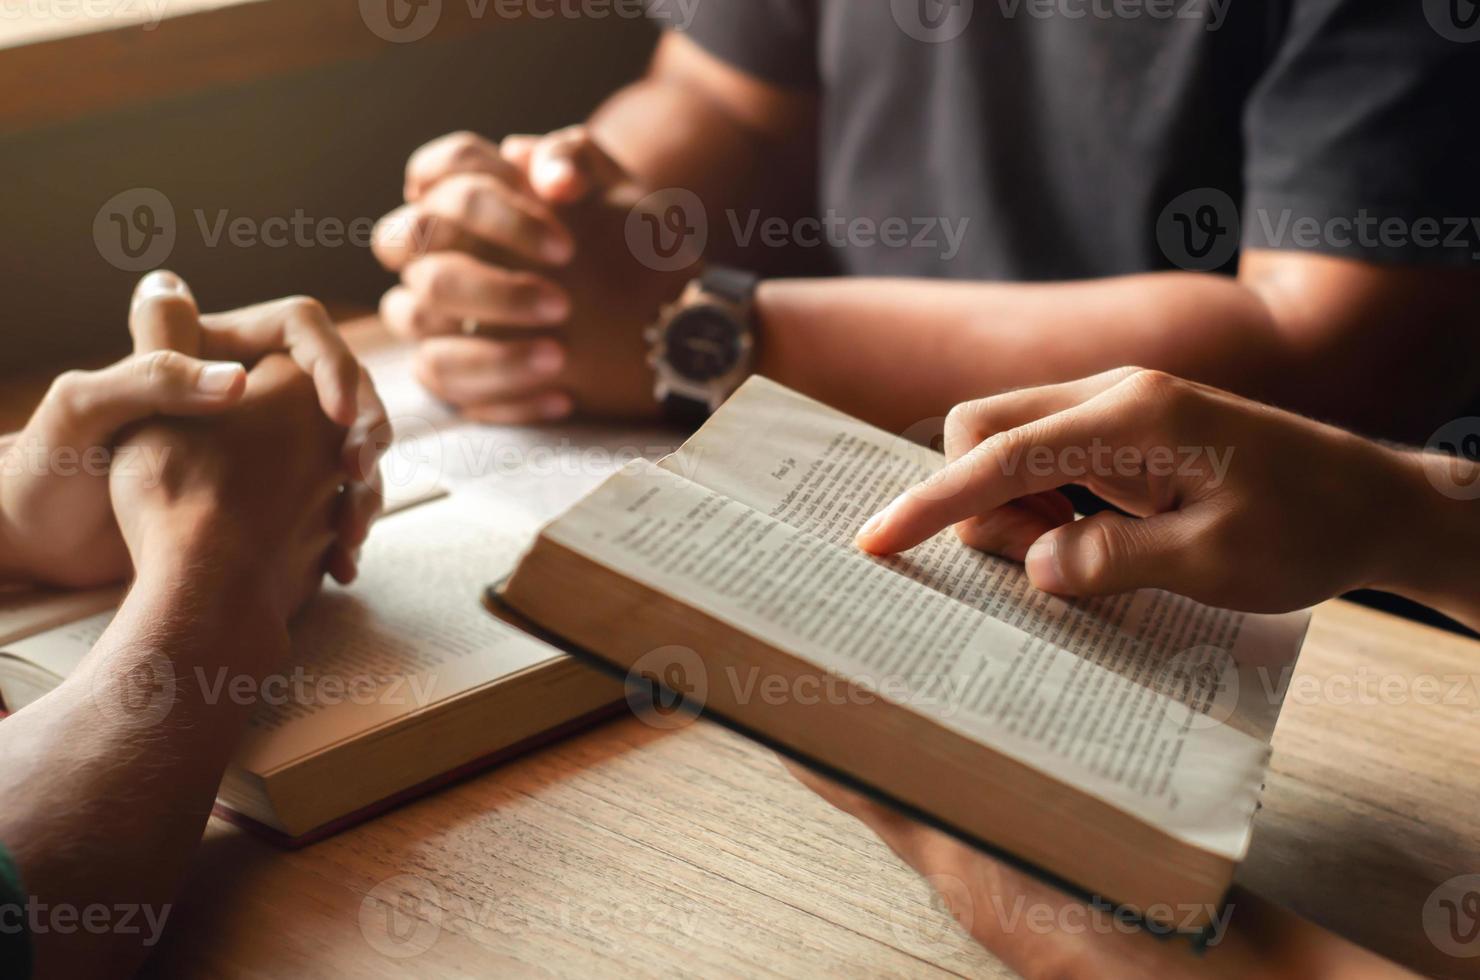 Joven leyendo la Biblia con amigos que están orando a Dios, únete al grupo celular en la iglesia. un pequeño grupo de cristianos o conceptos en una iglesia en una iglesia. foto